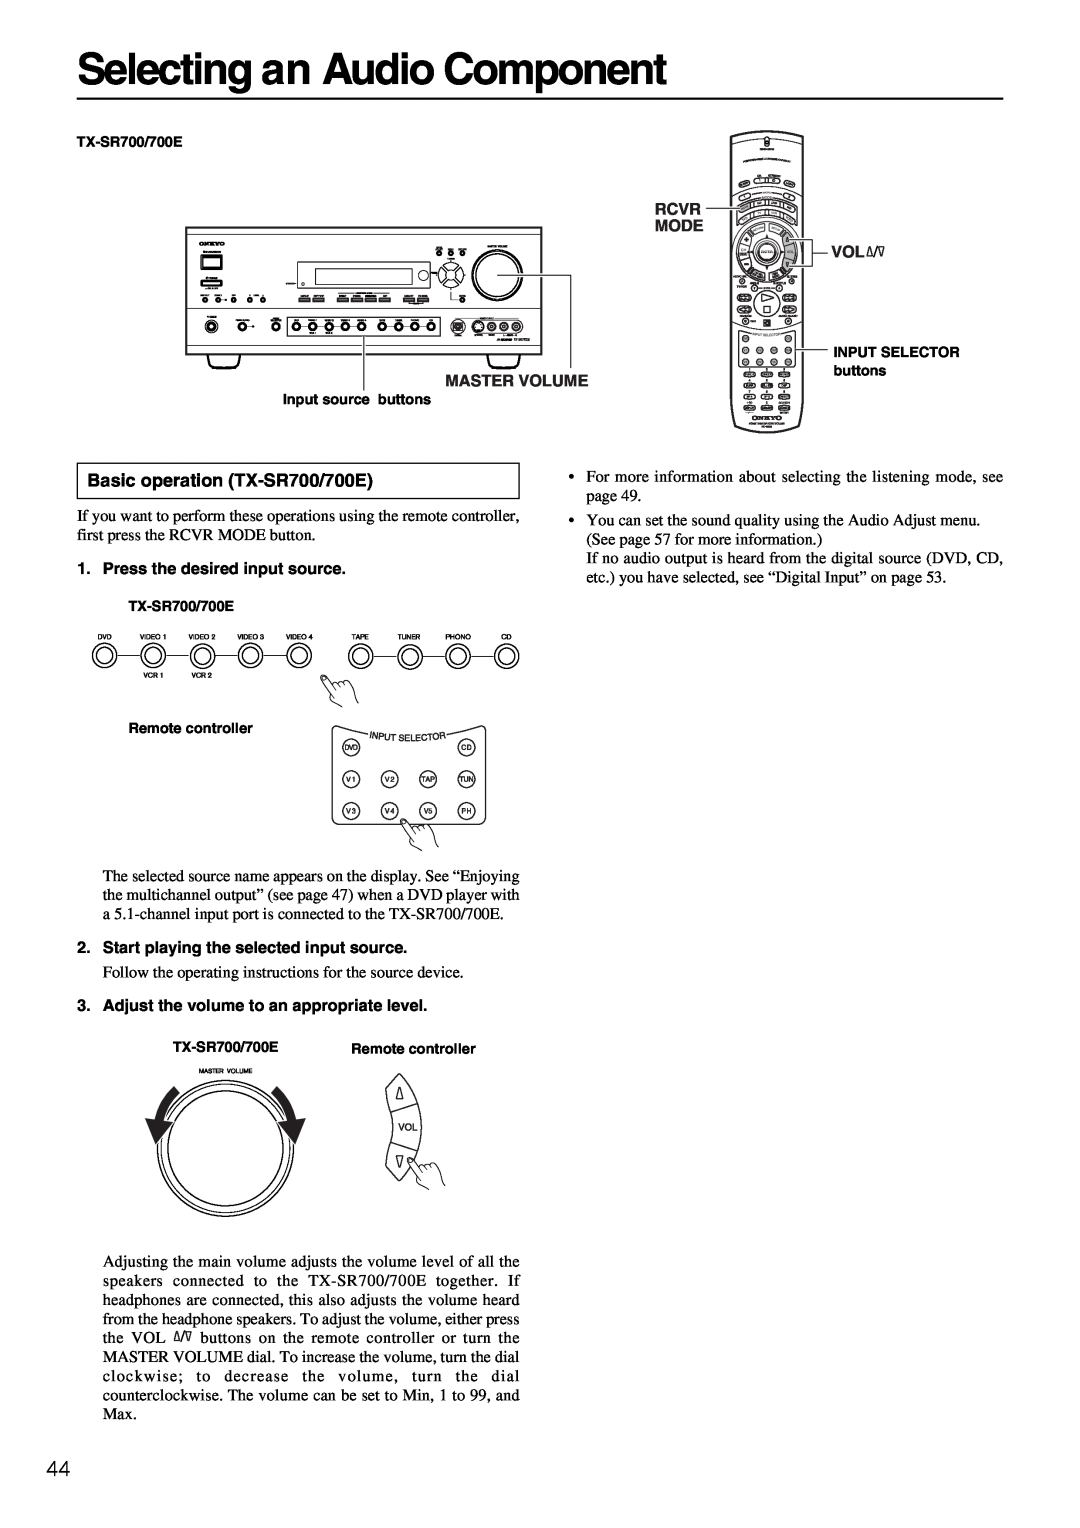 Onkyo TX-SR600/600E instruction manual Selecting an Audio Component, Basic operation TX-SR700/700E 